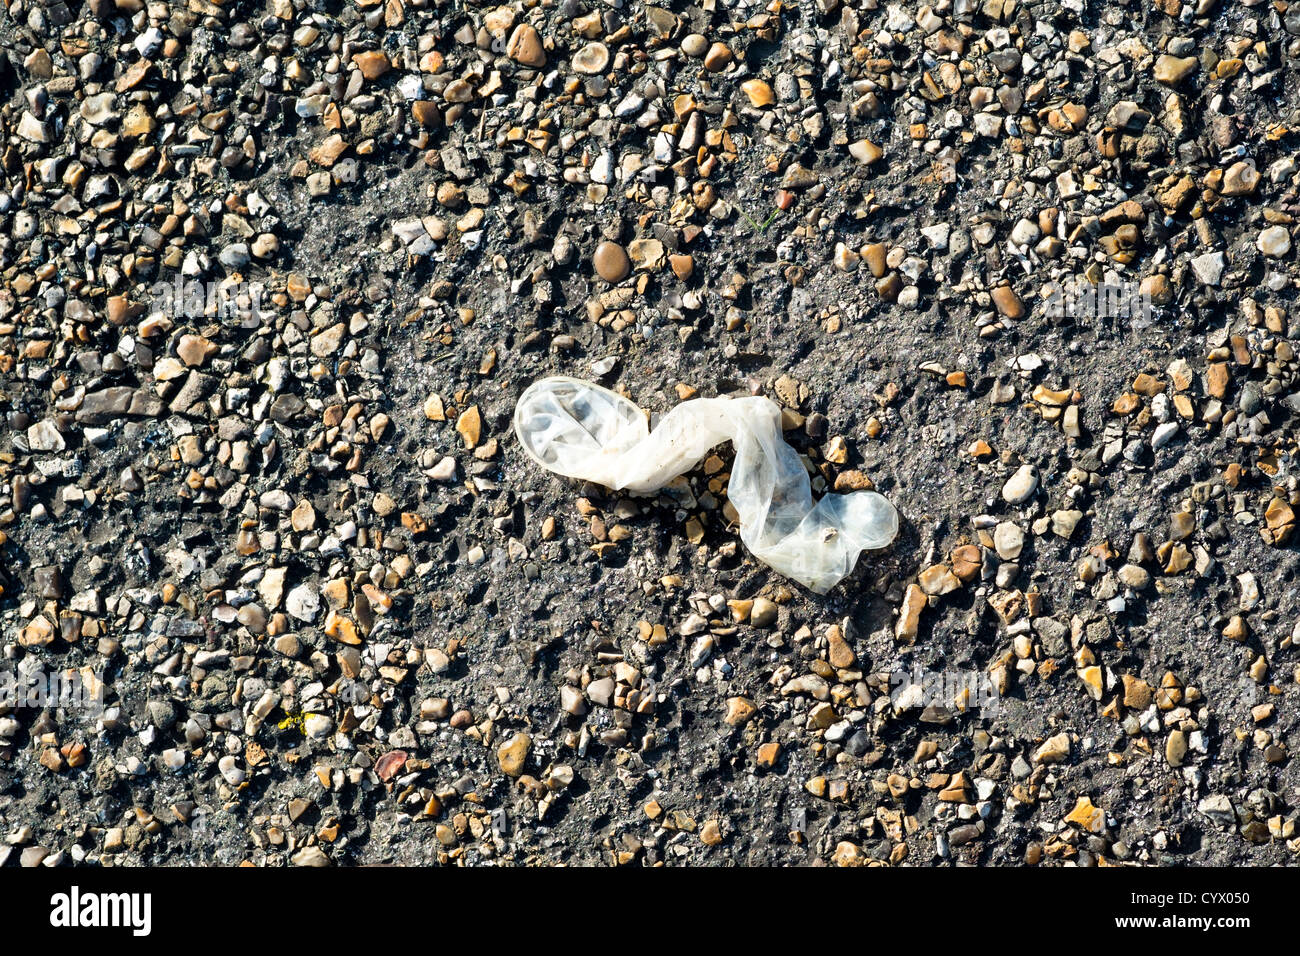 Discarded condom left on public path Stock Photo